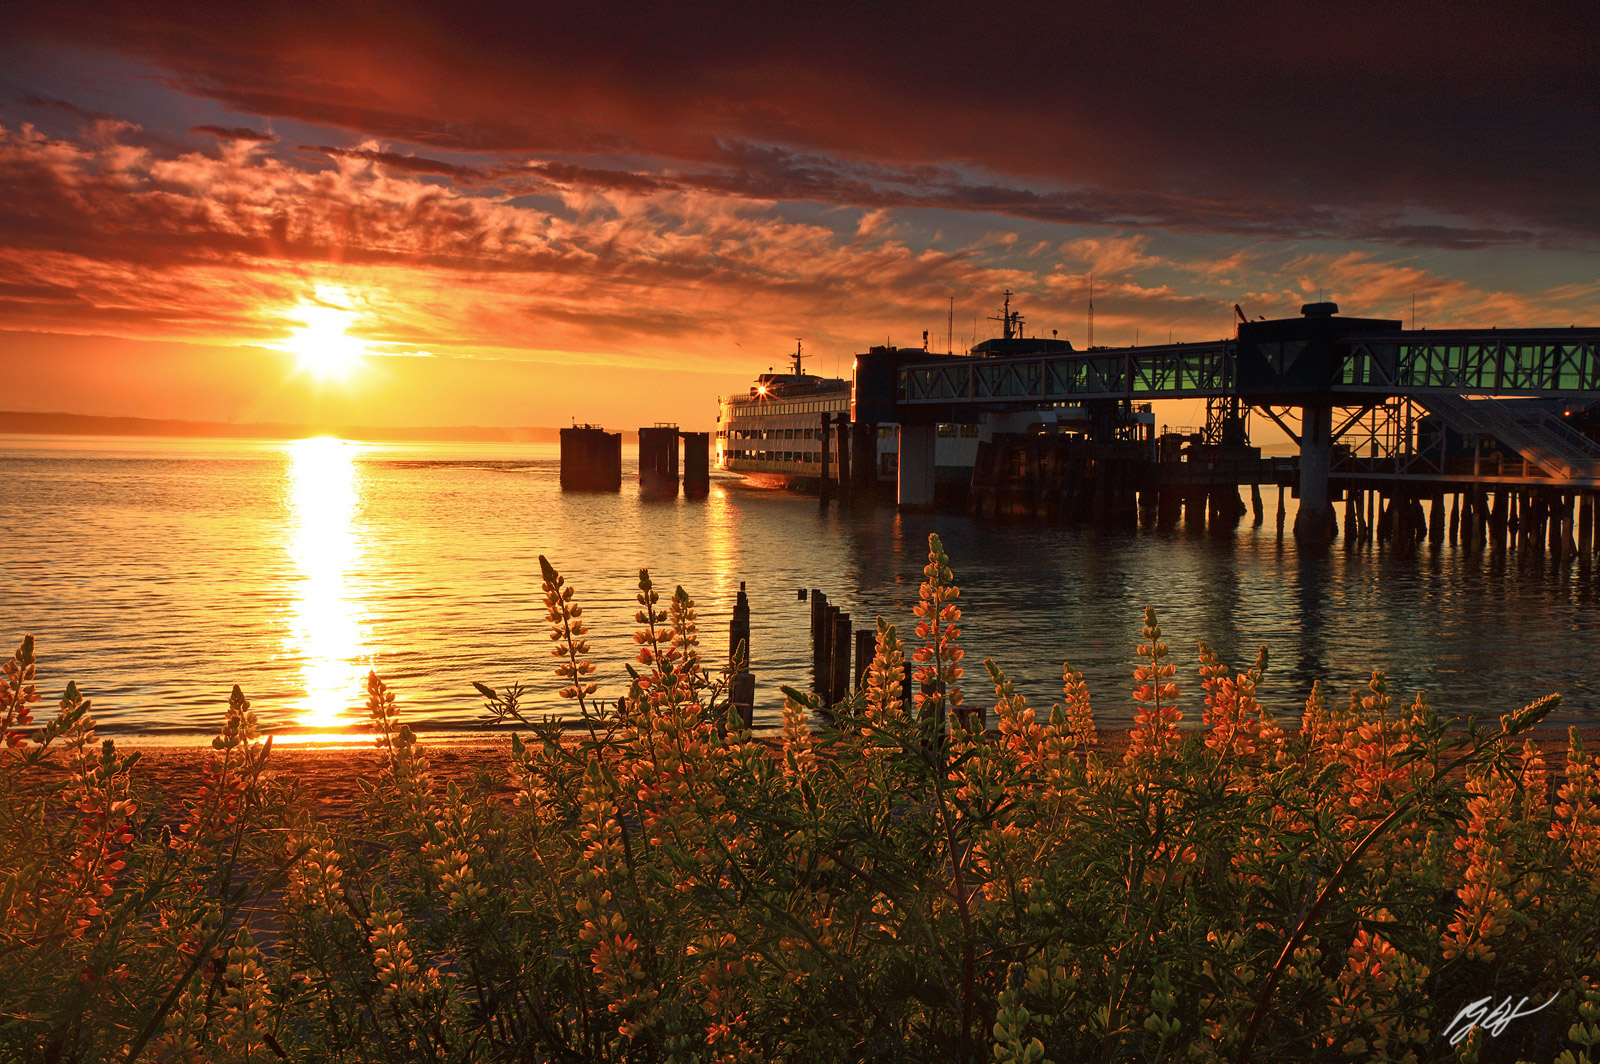 Sunset Wildflowers and the Edmonds Ferry at Dock from Edmonds, Beach in Edmonds Washington